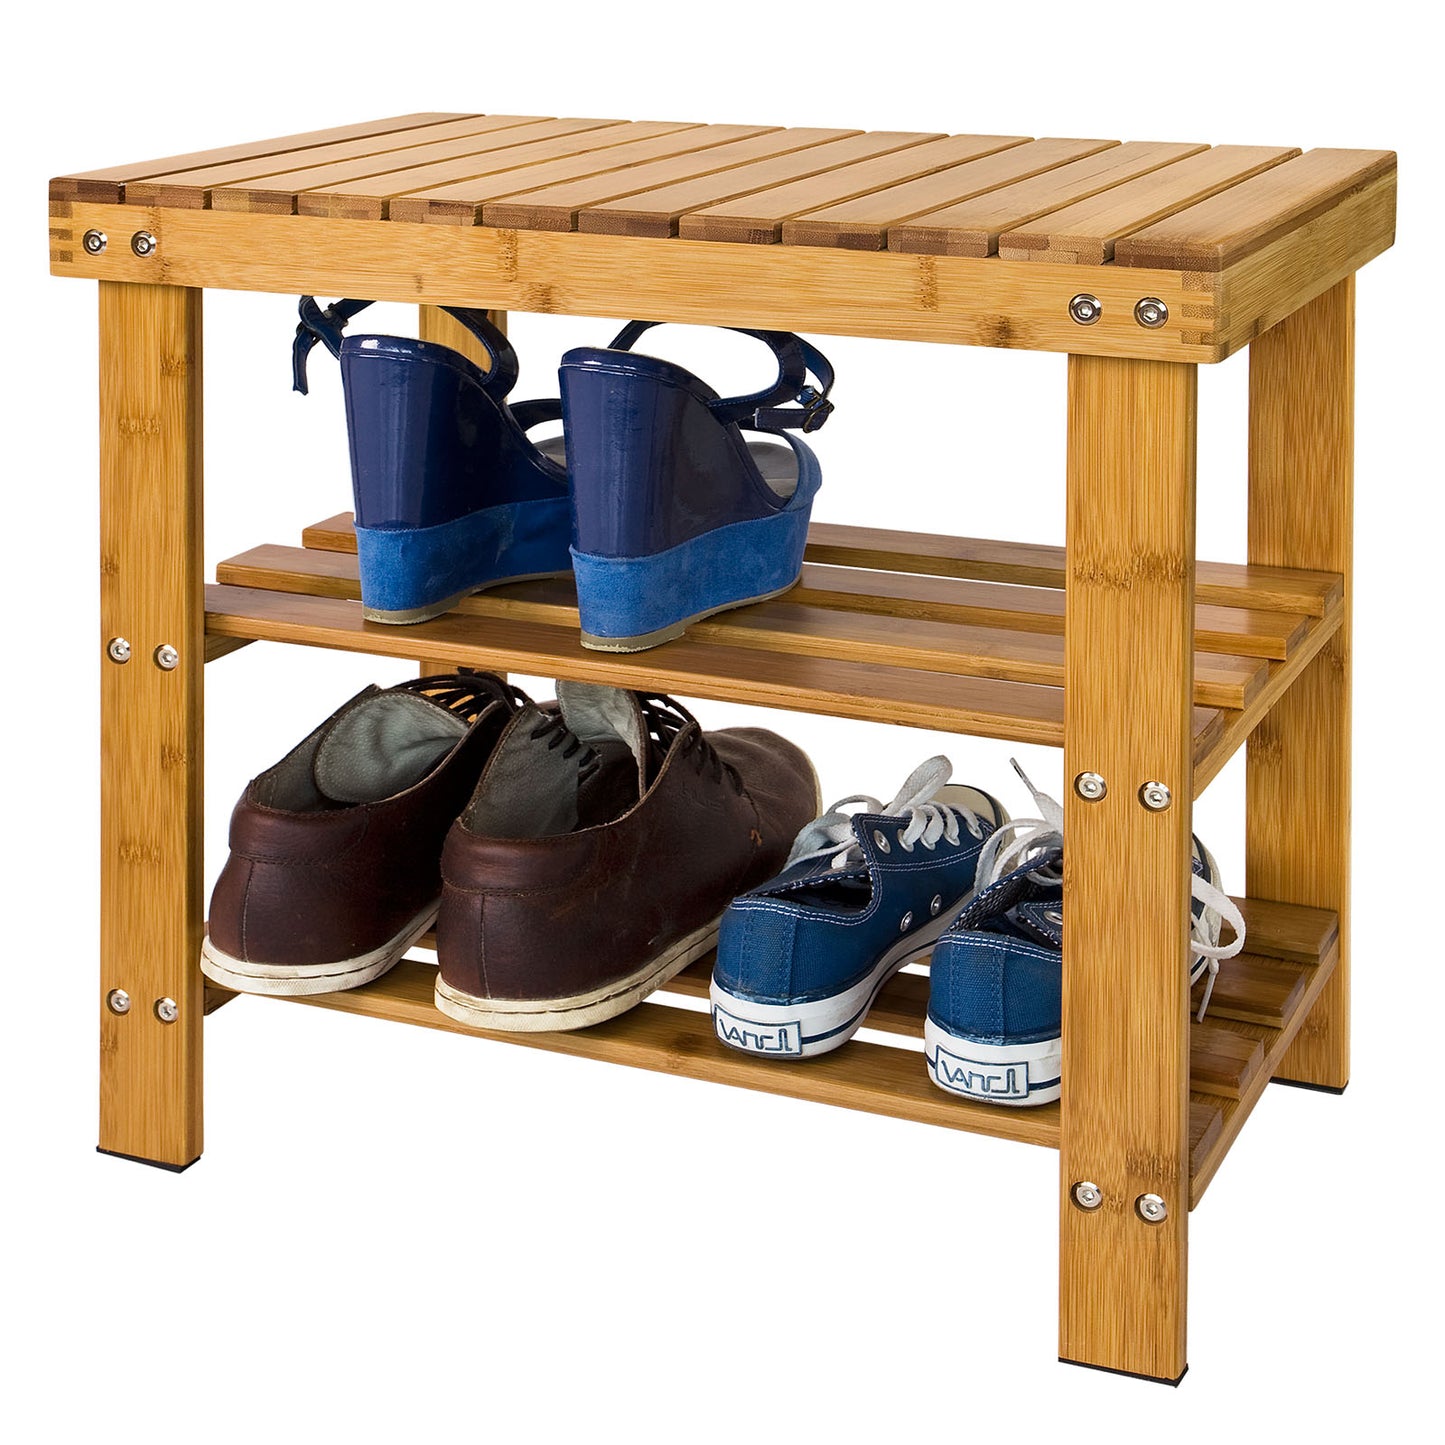 SoBuy FSR02-K-N Bamboo Shoe Bench, Shoe Rack, Storage Bench with Shelves, 50cmx29cmx45cm